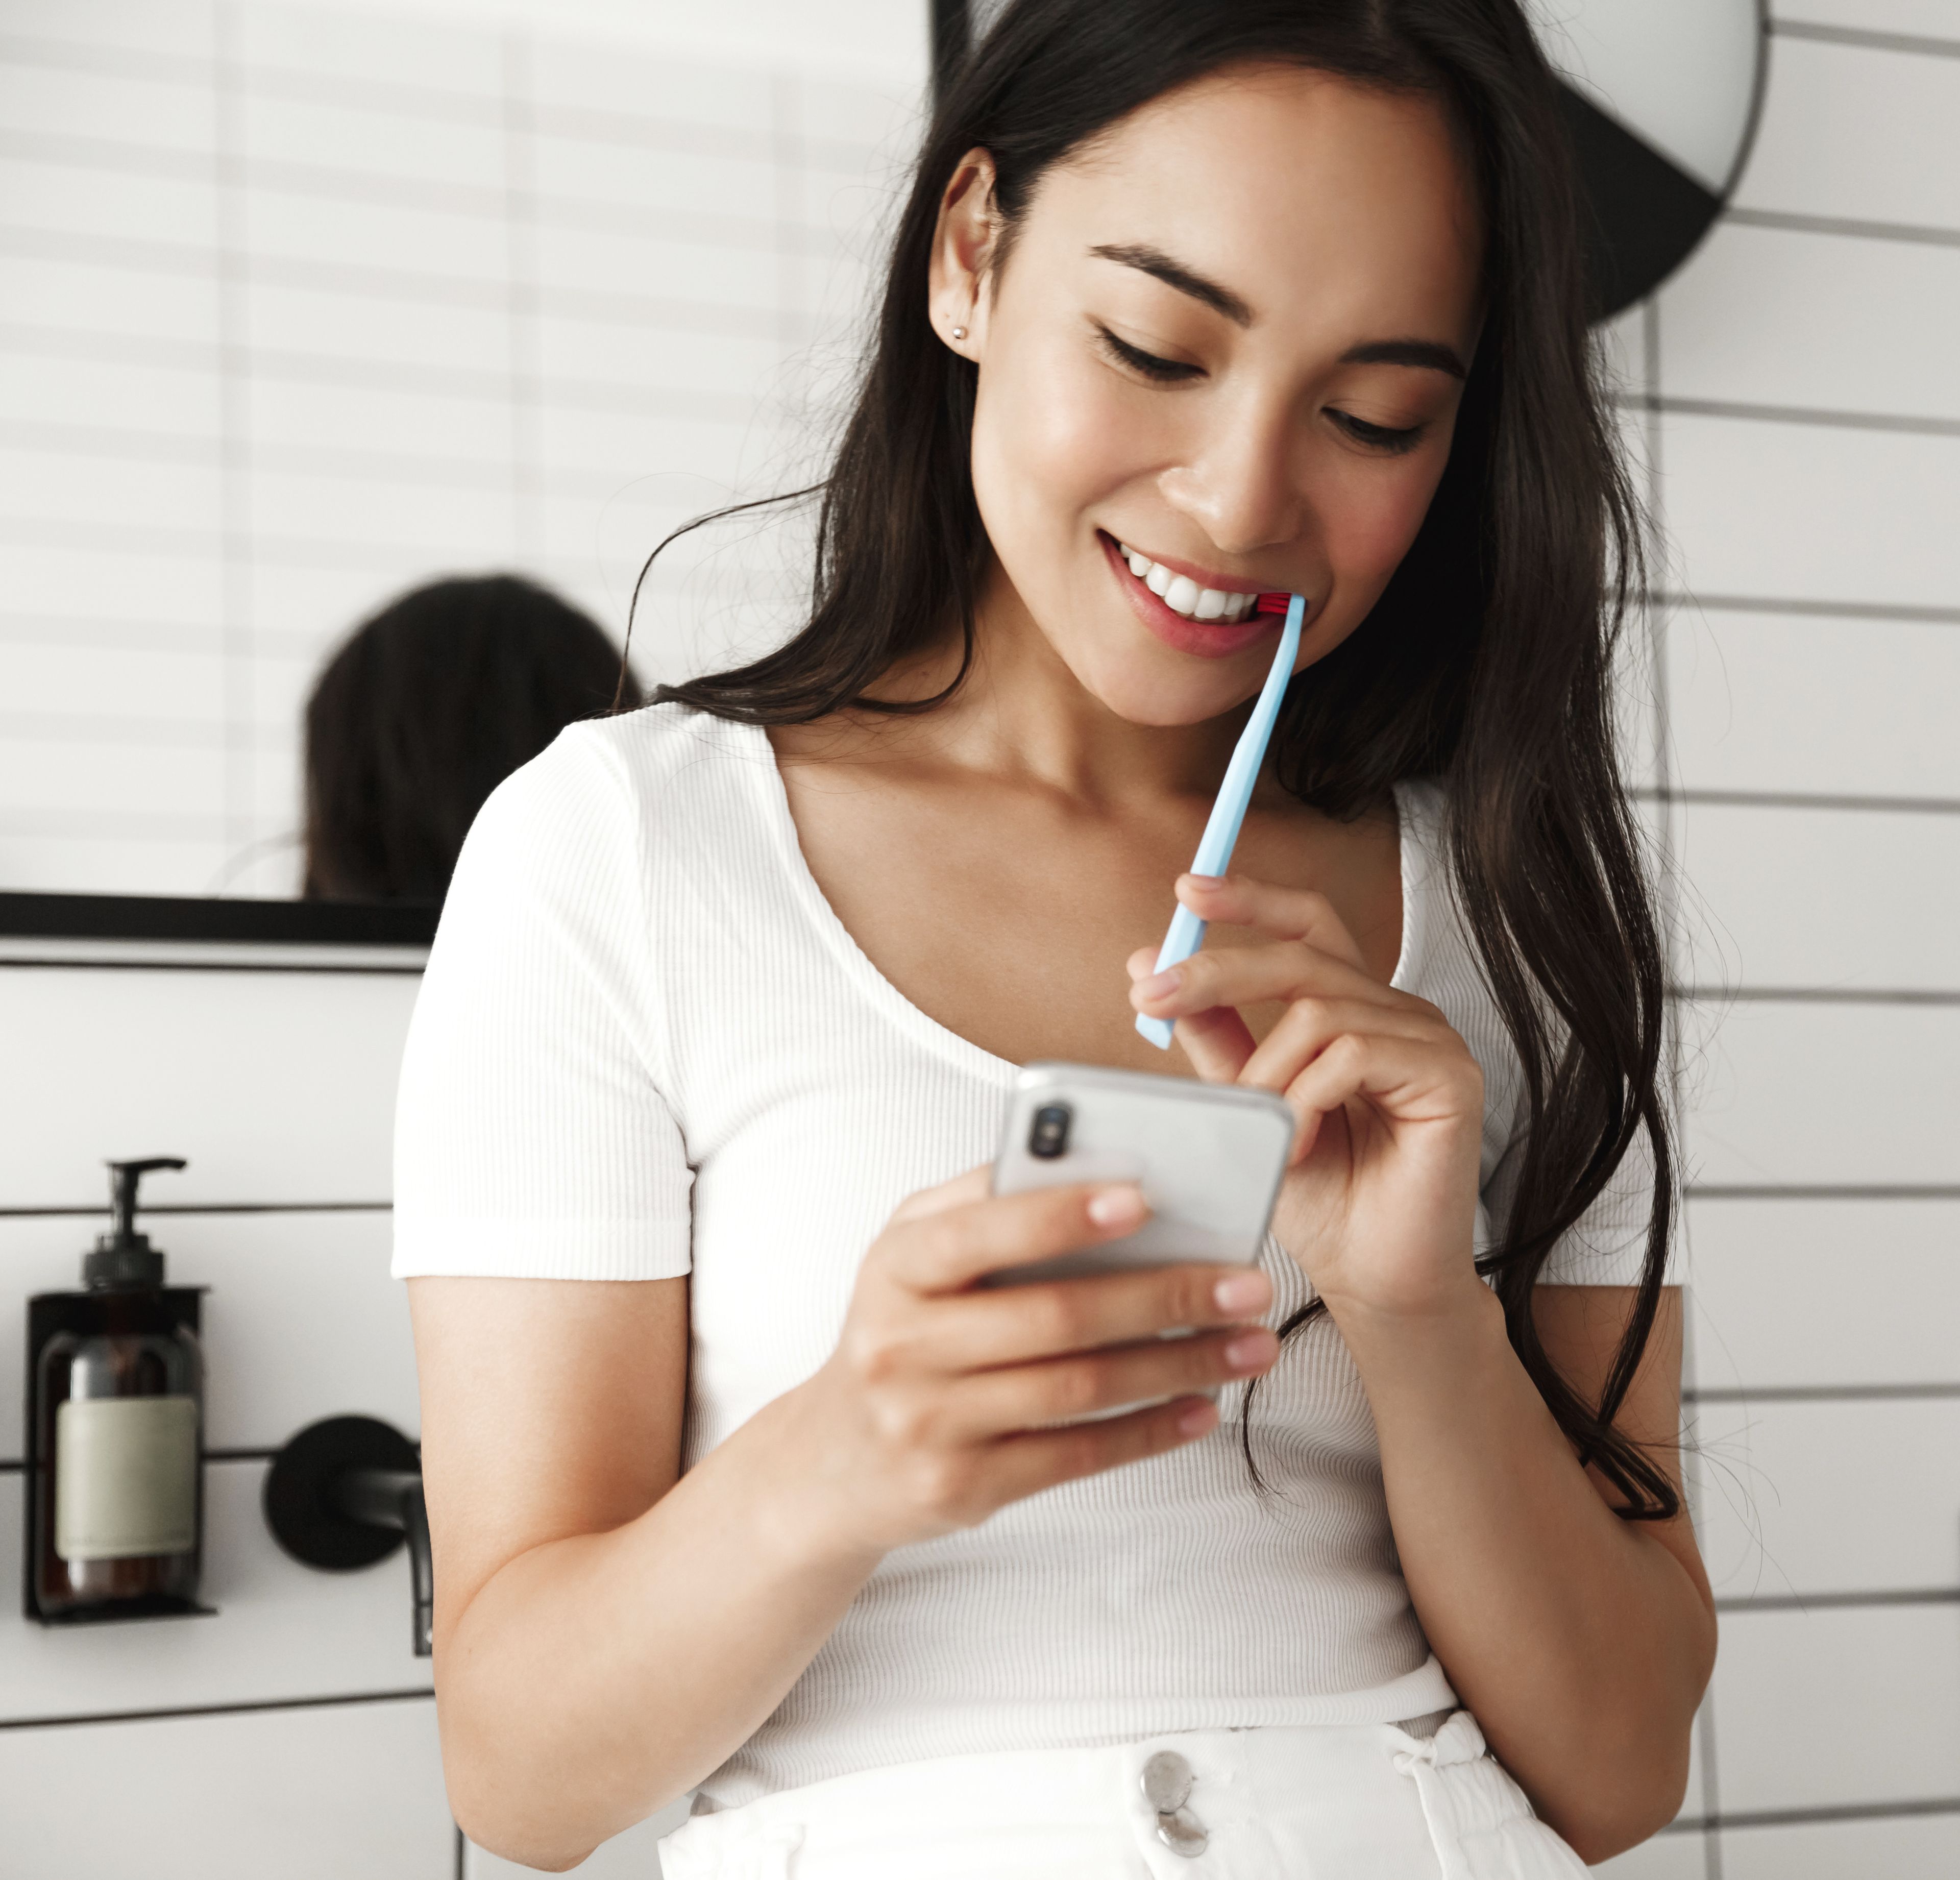 Girl brushing her teeth with smartphone